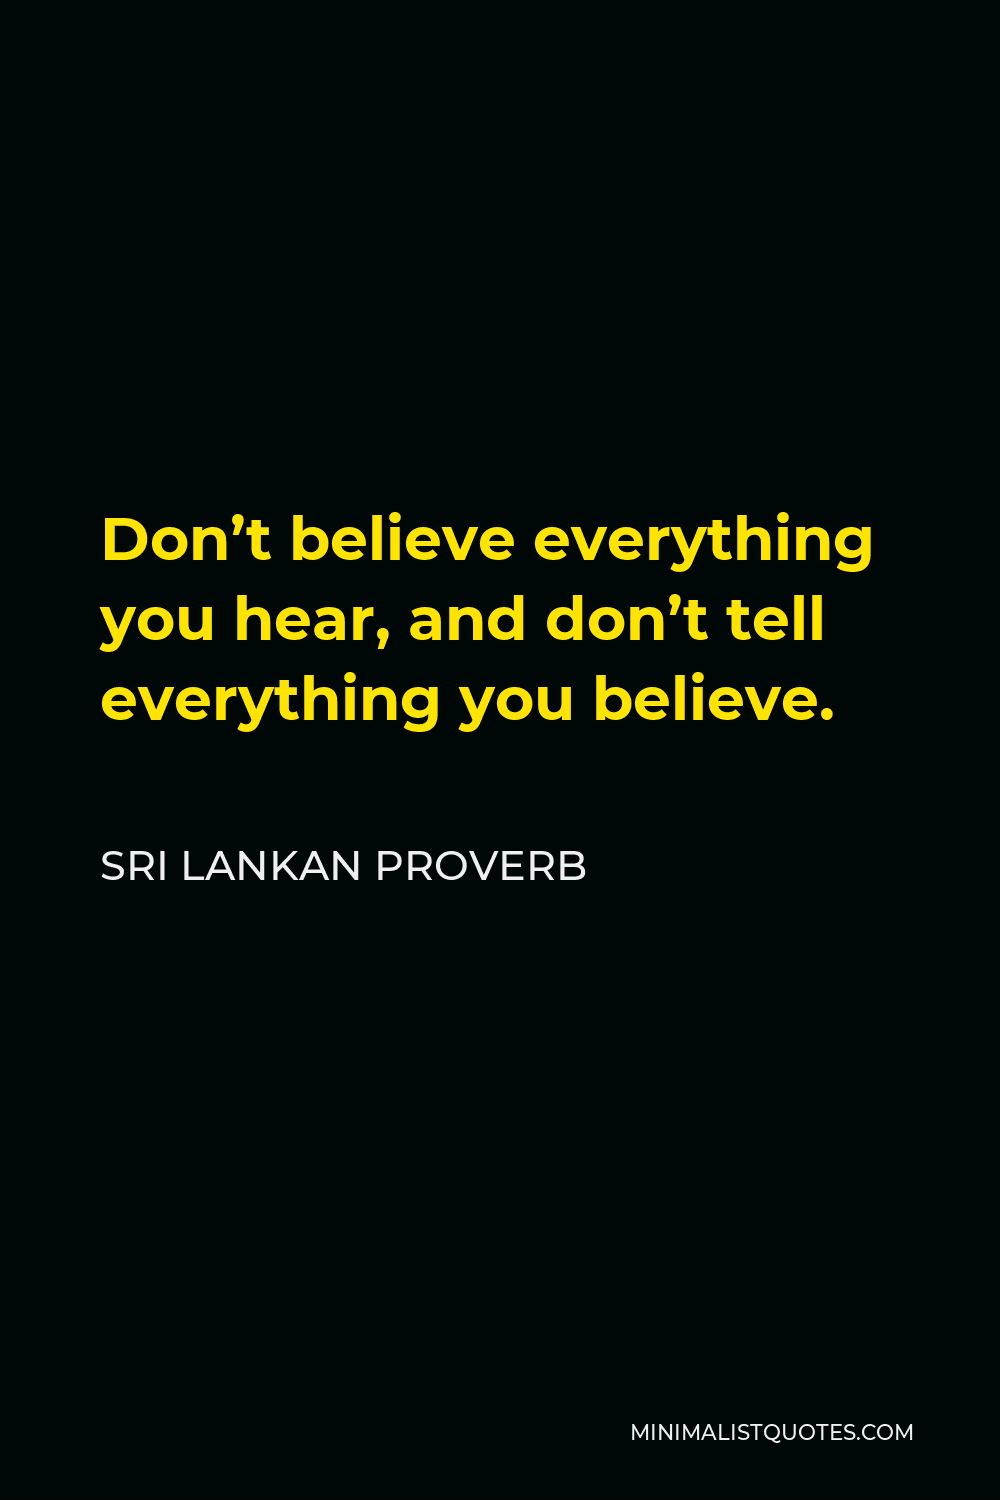 Sri Lankan Proverb Quote - Don’t believe everything you hear, and don’t tell everything you believe.